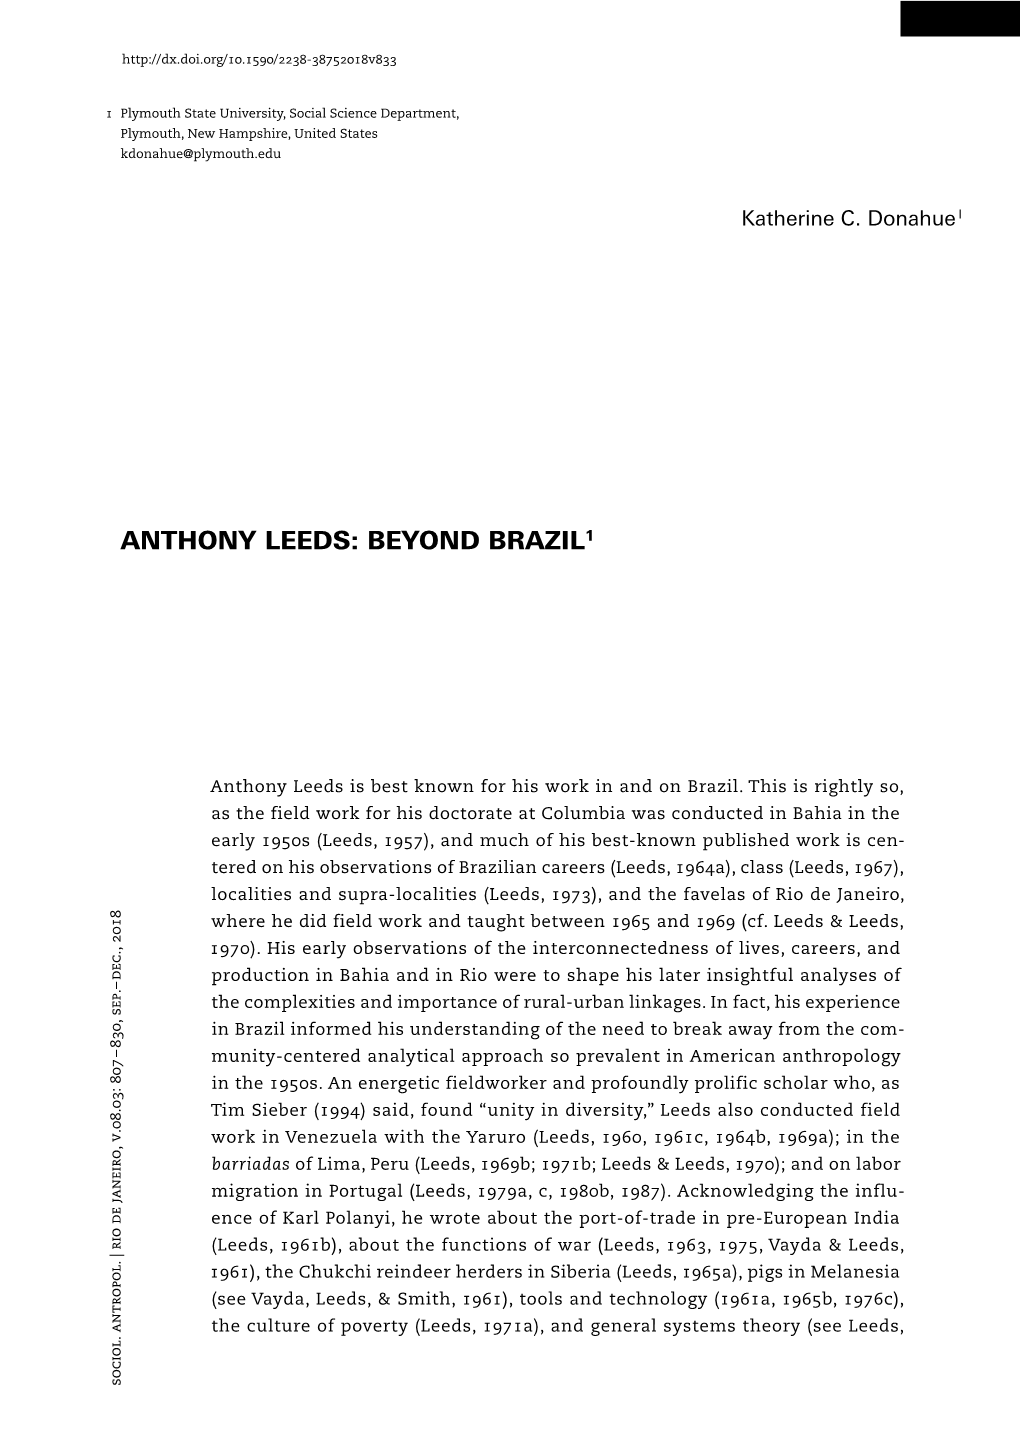 Anthony Leeds: Beyond Brazil1